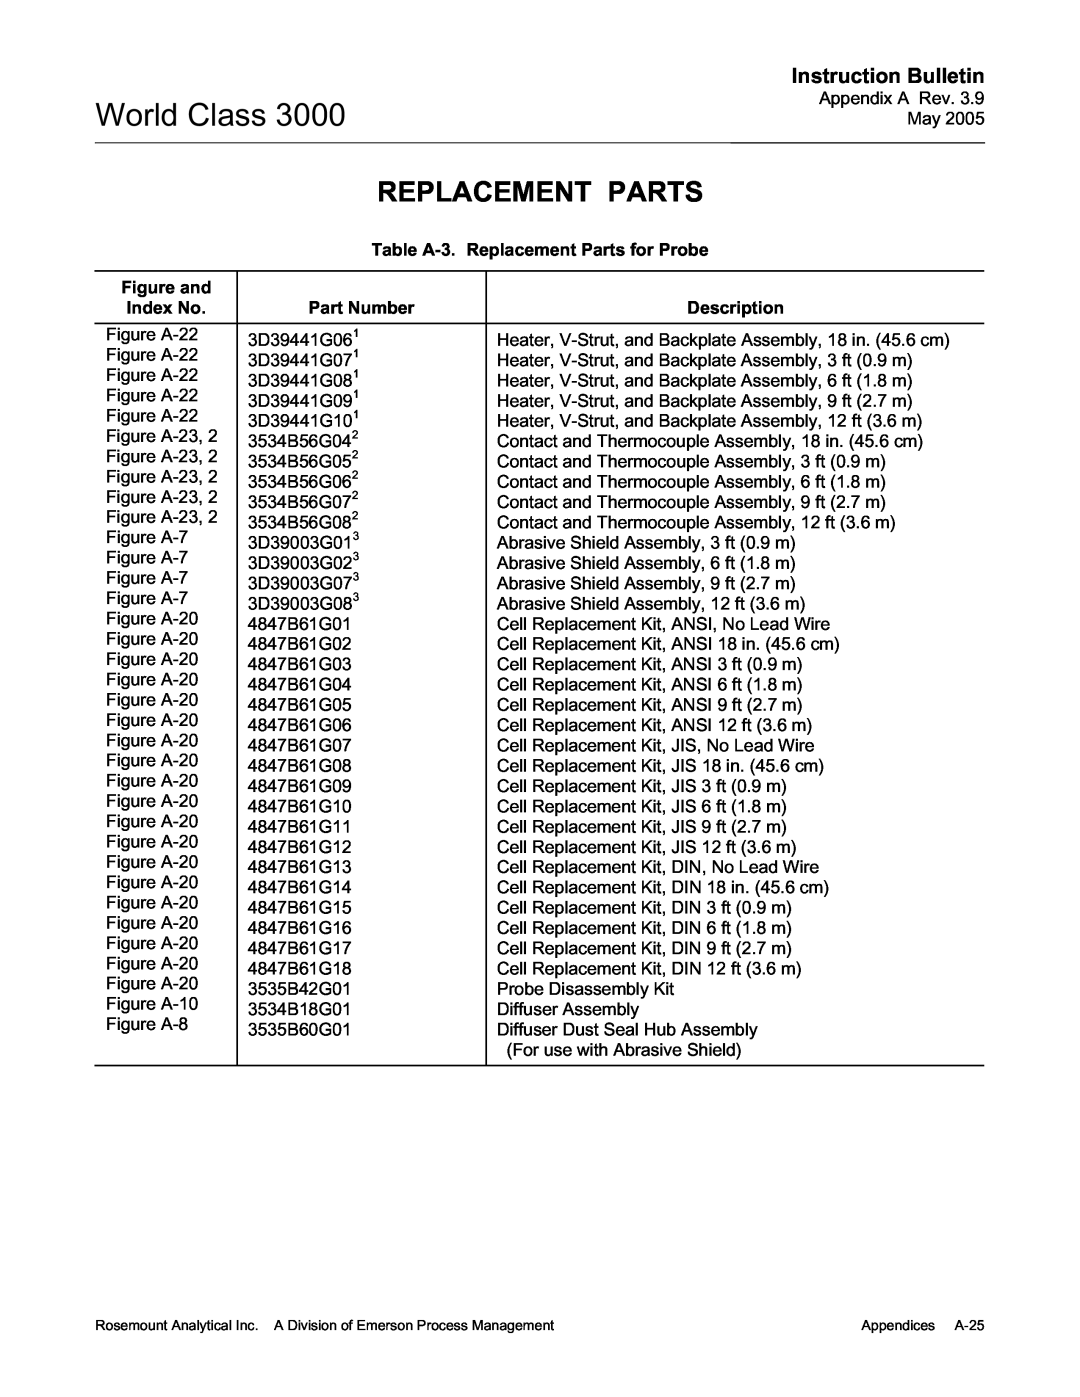 Emerson 3000 Replacement Parts, World Class, Instruction Bulletin, Figure and Index No, Part Number, Description 